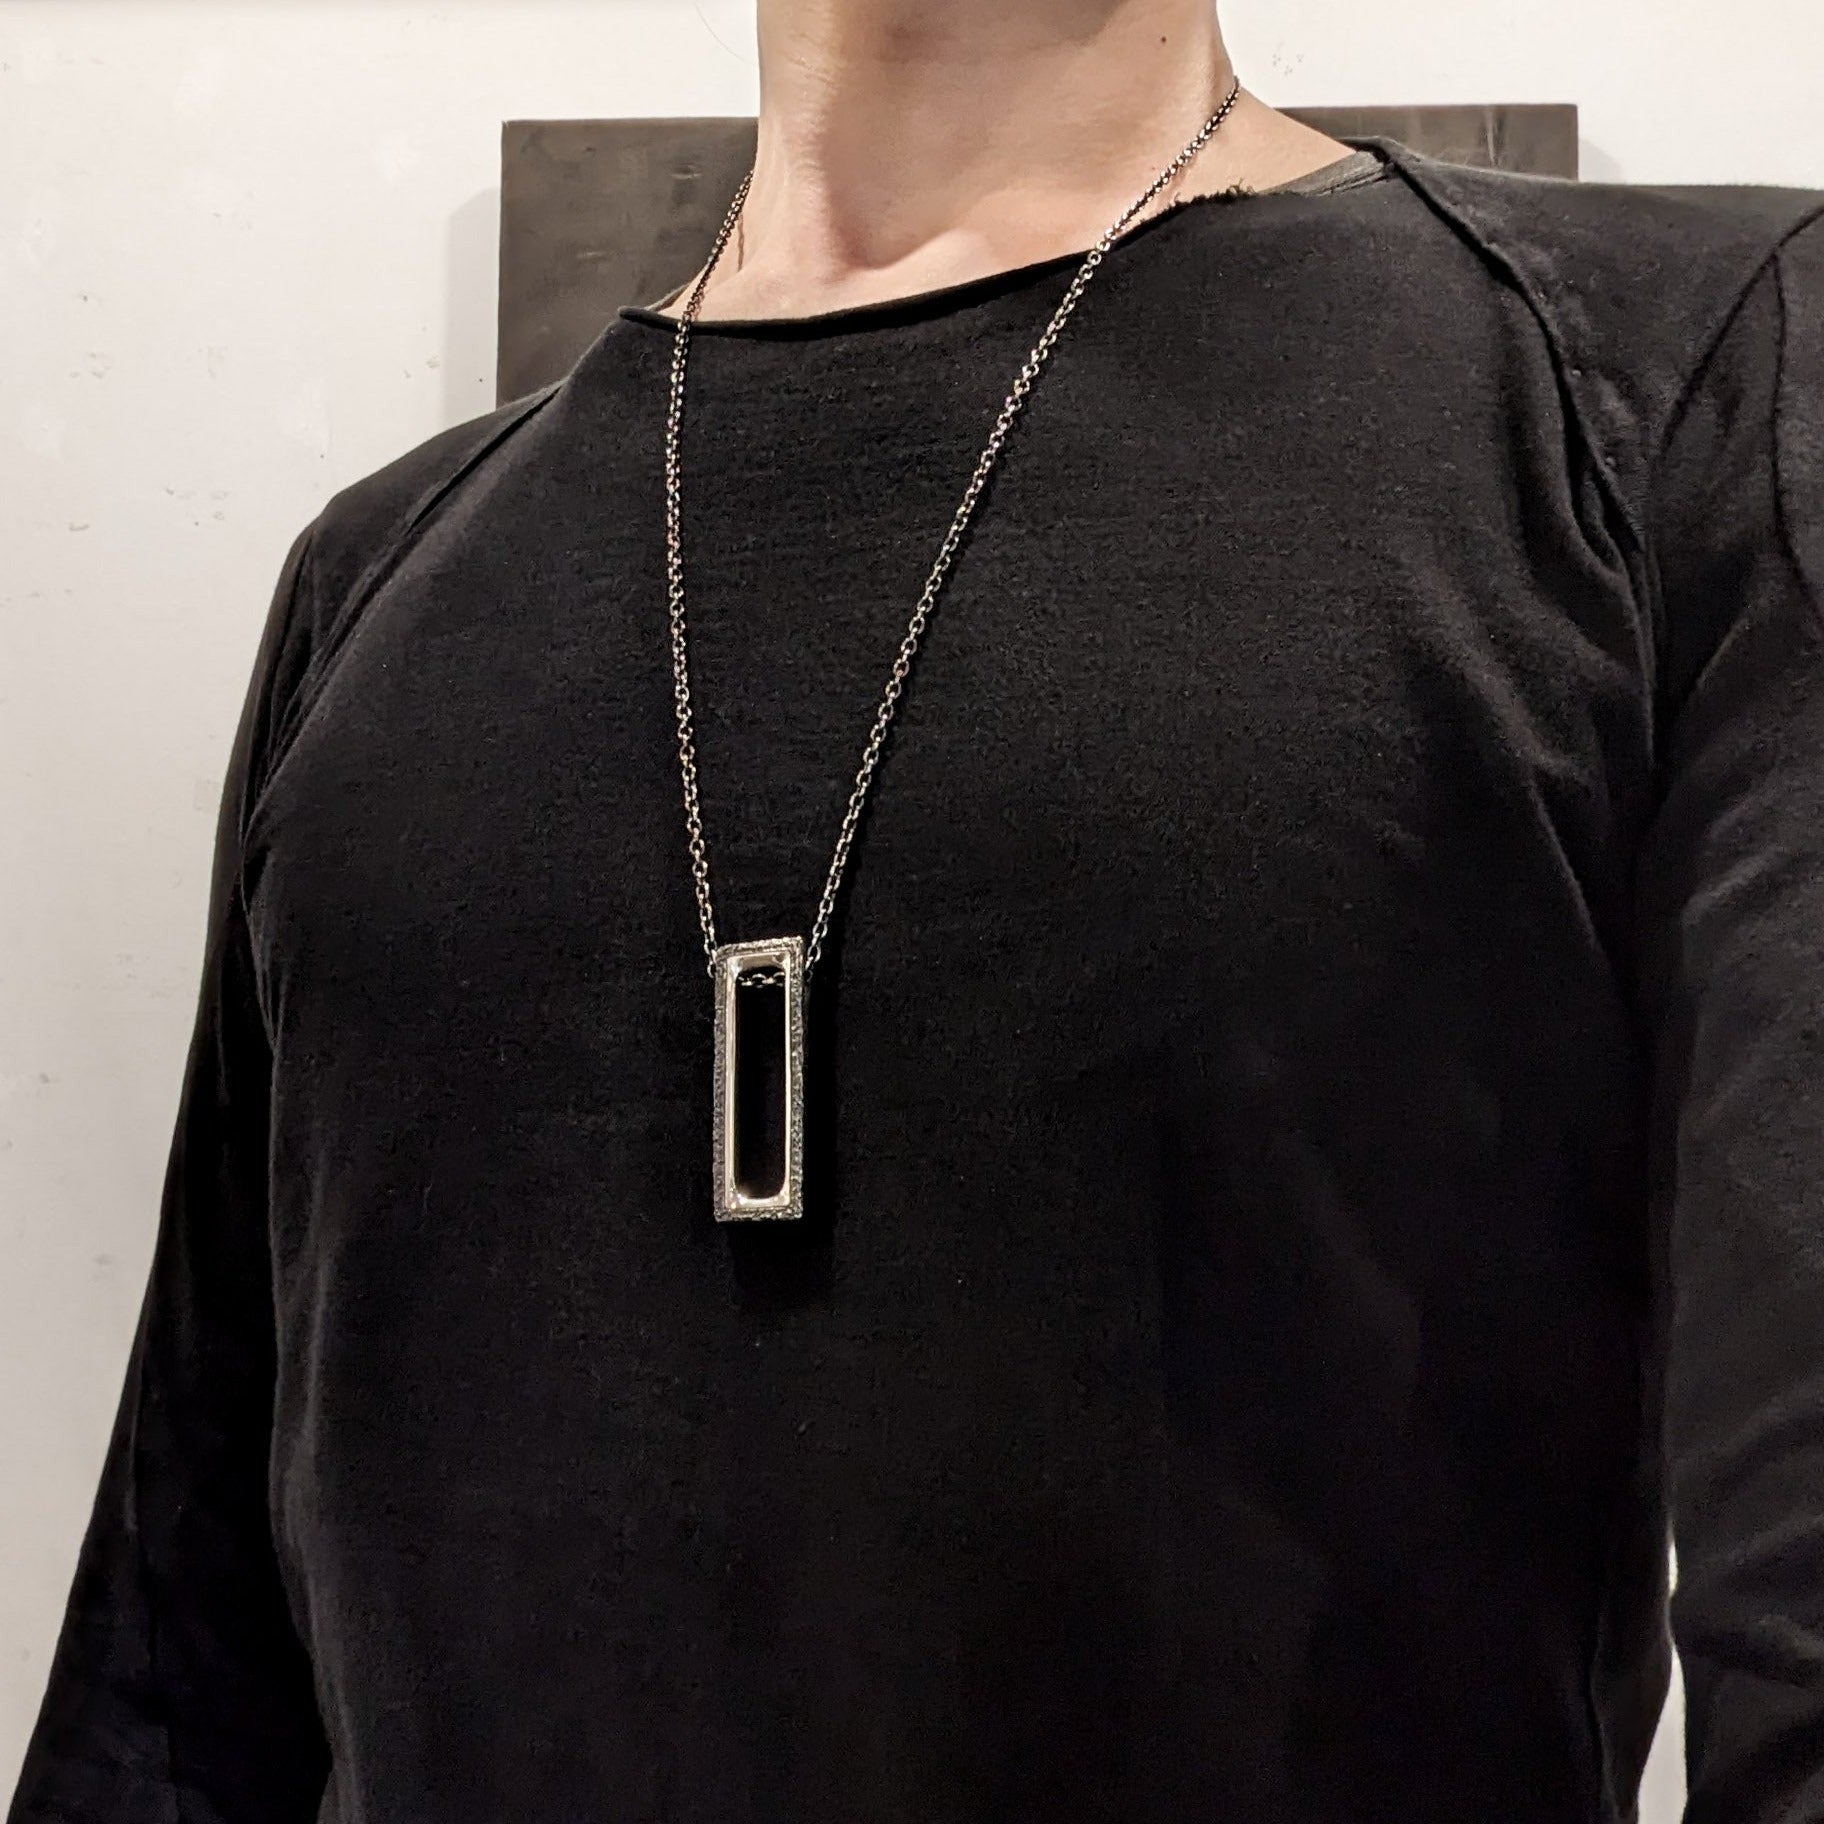 essence - Silver necklace with original clasp - Avant Gardist